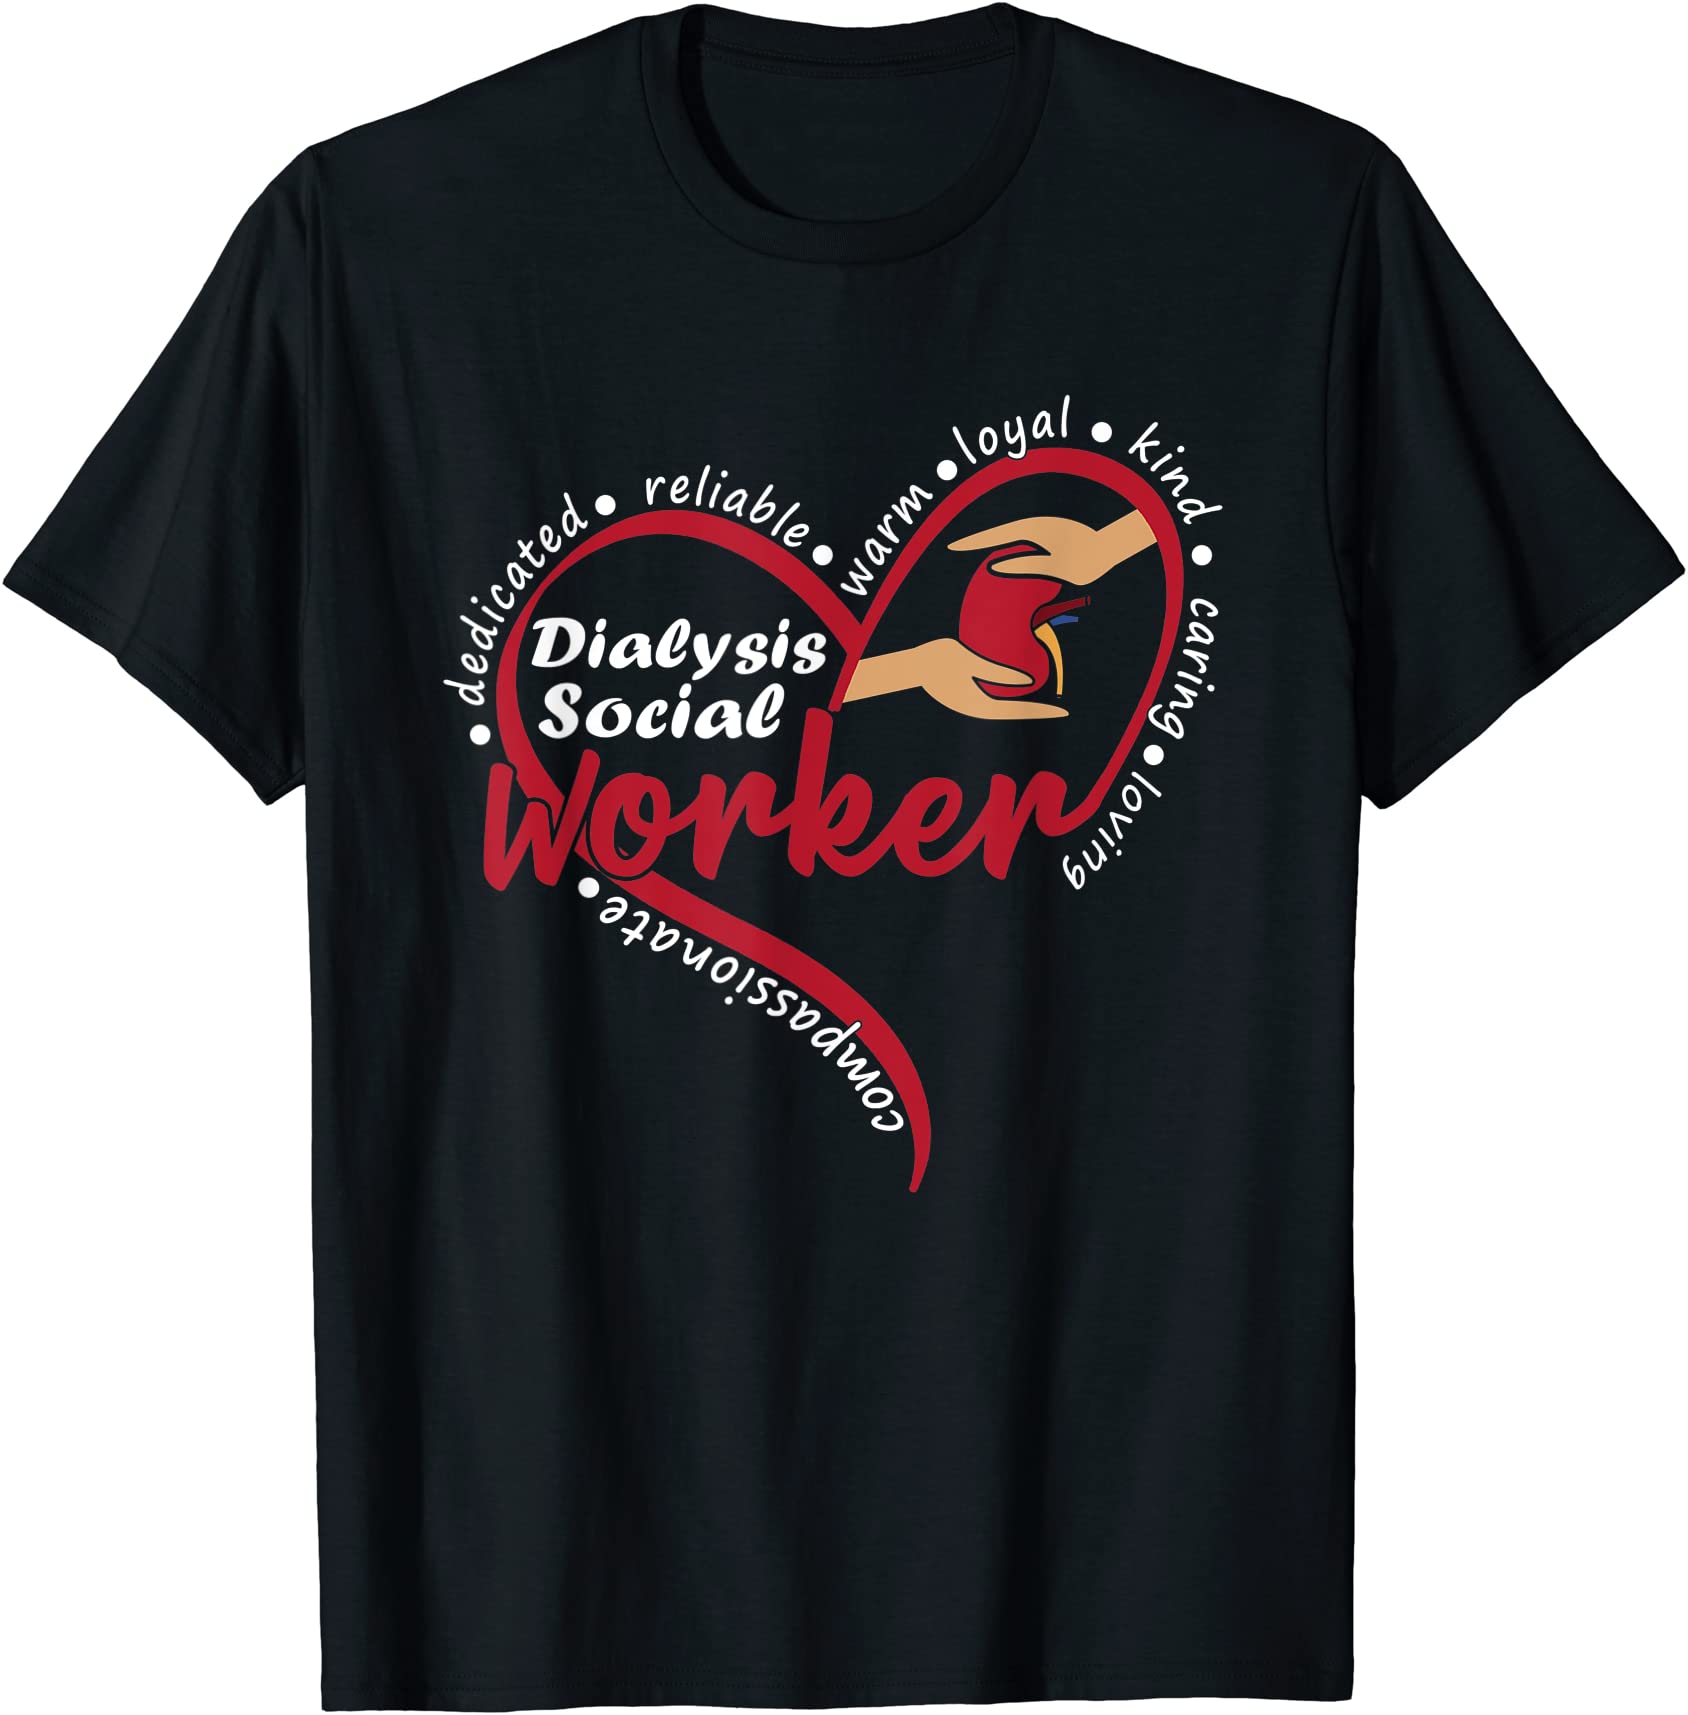 dialysis social worker renal heart t shirt men - Buy t-shirt designs